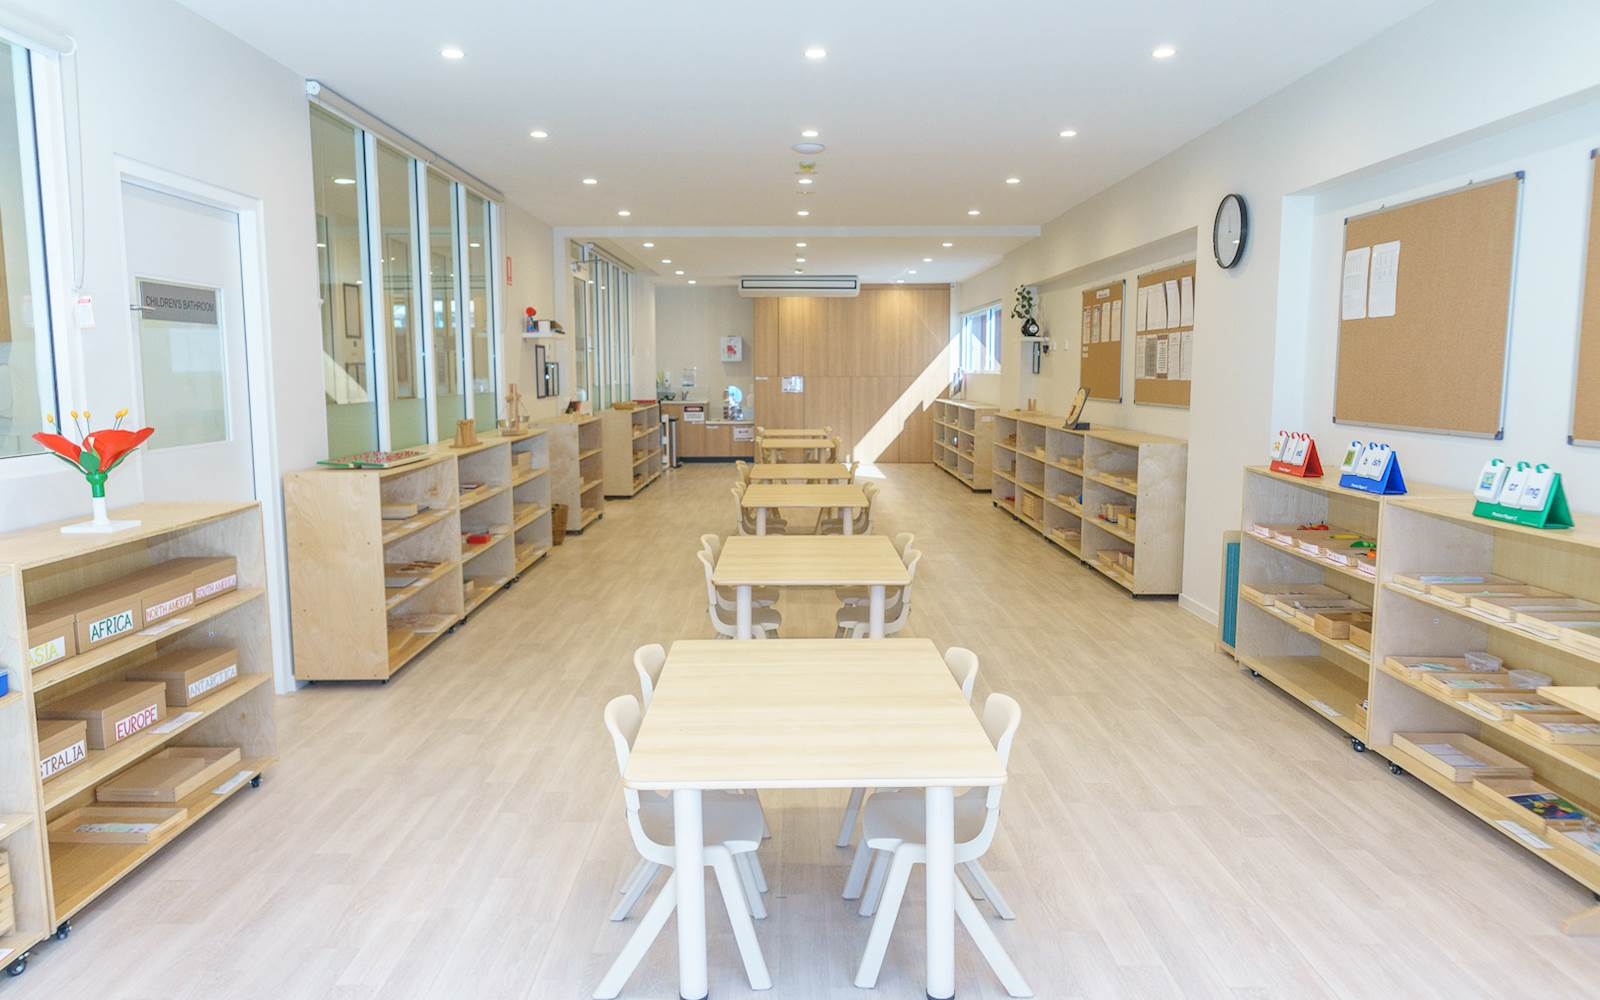 Toongabbie Montessori Academy